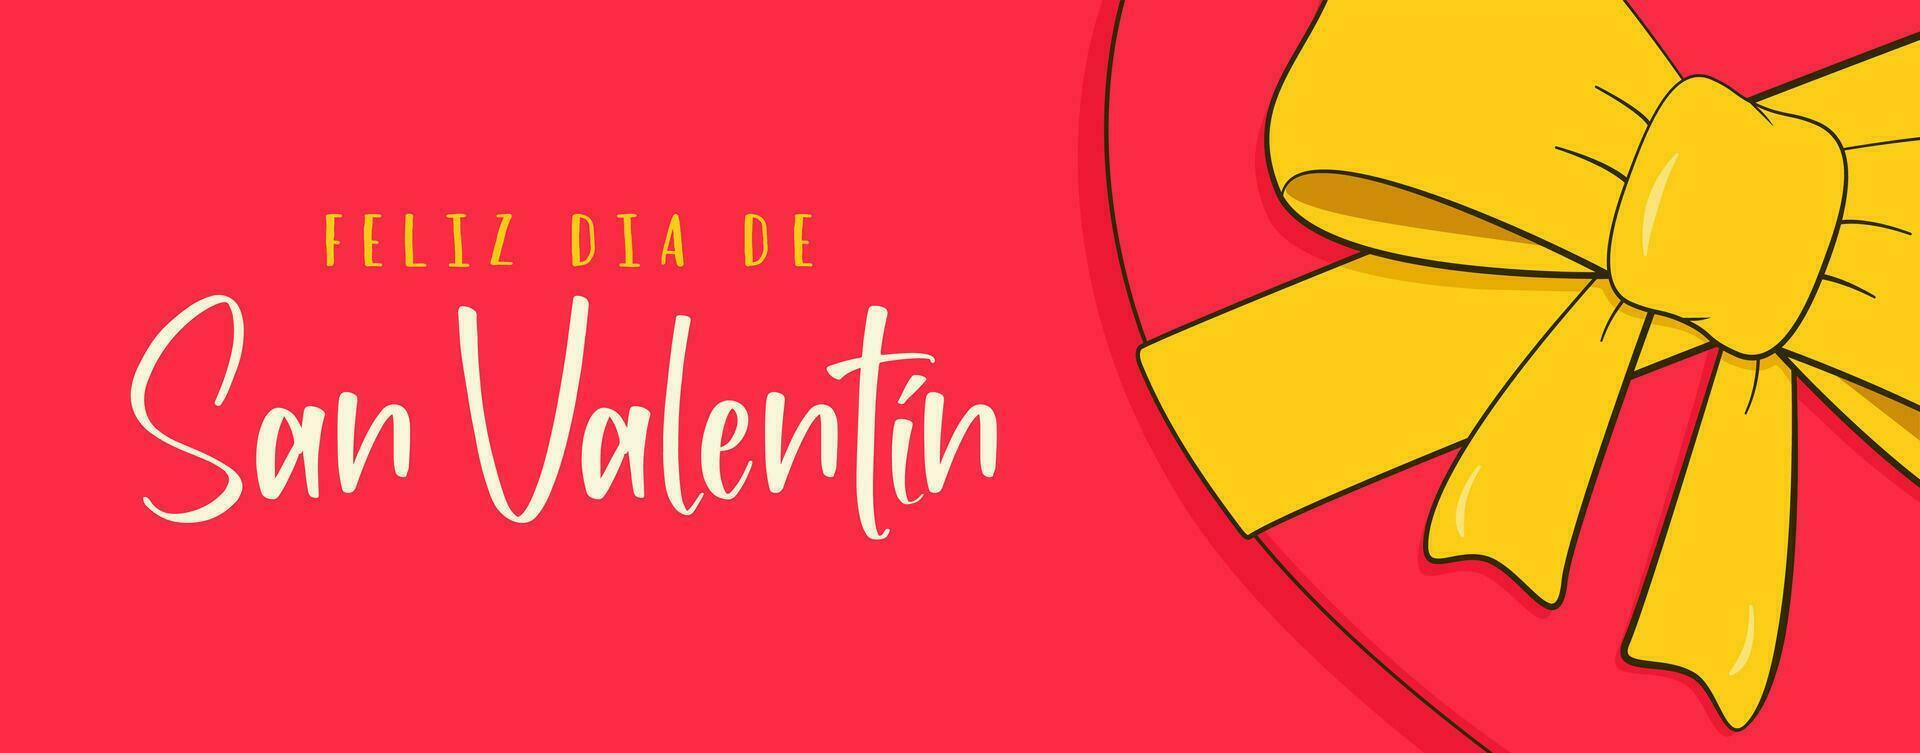 Valentijnsdag dag banier in Spaans vector